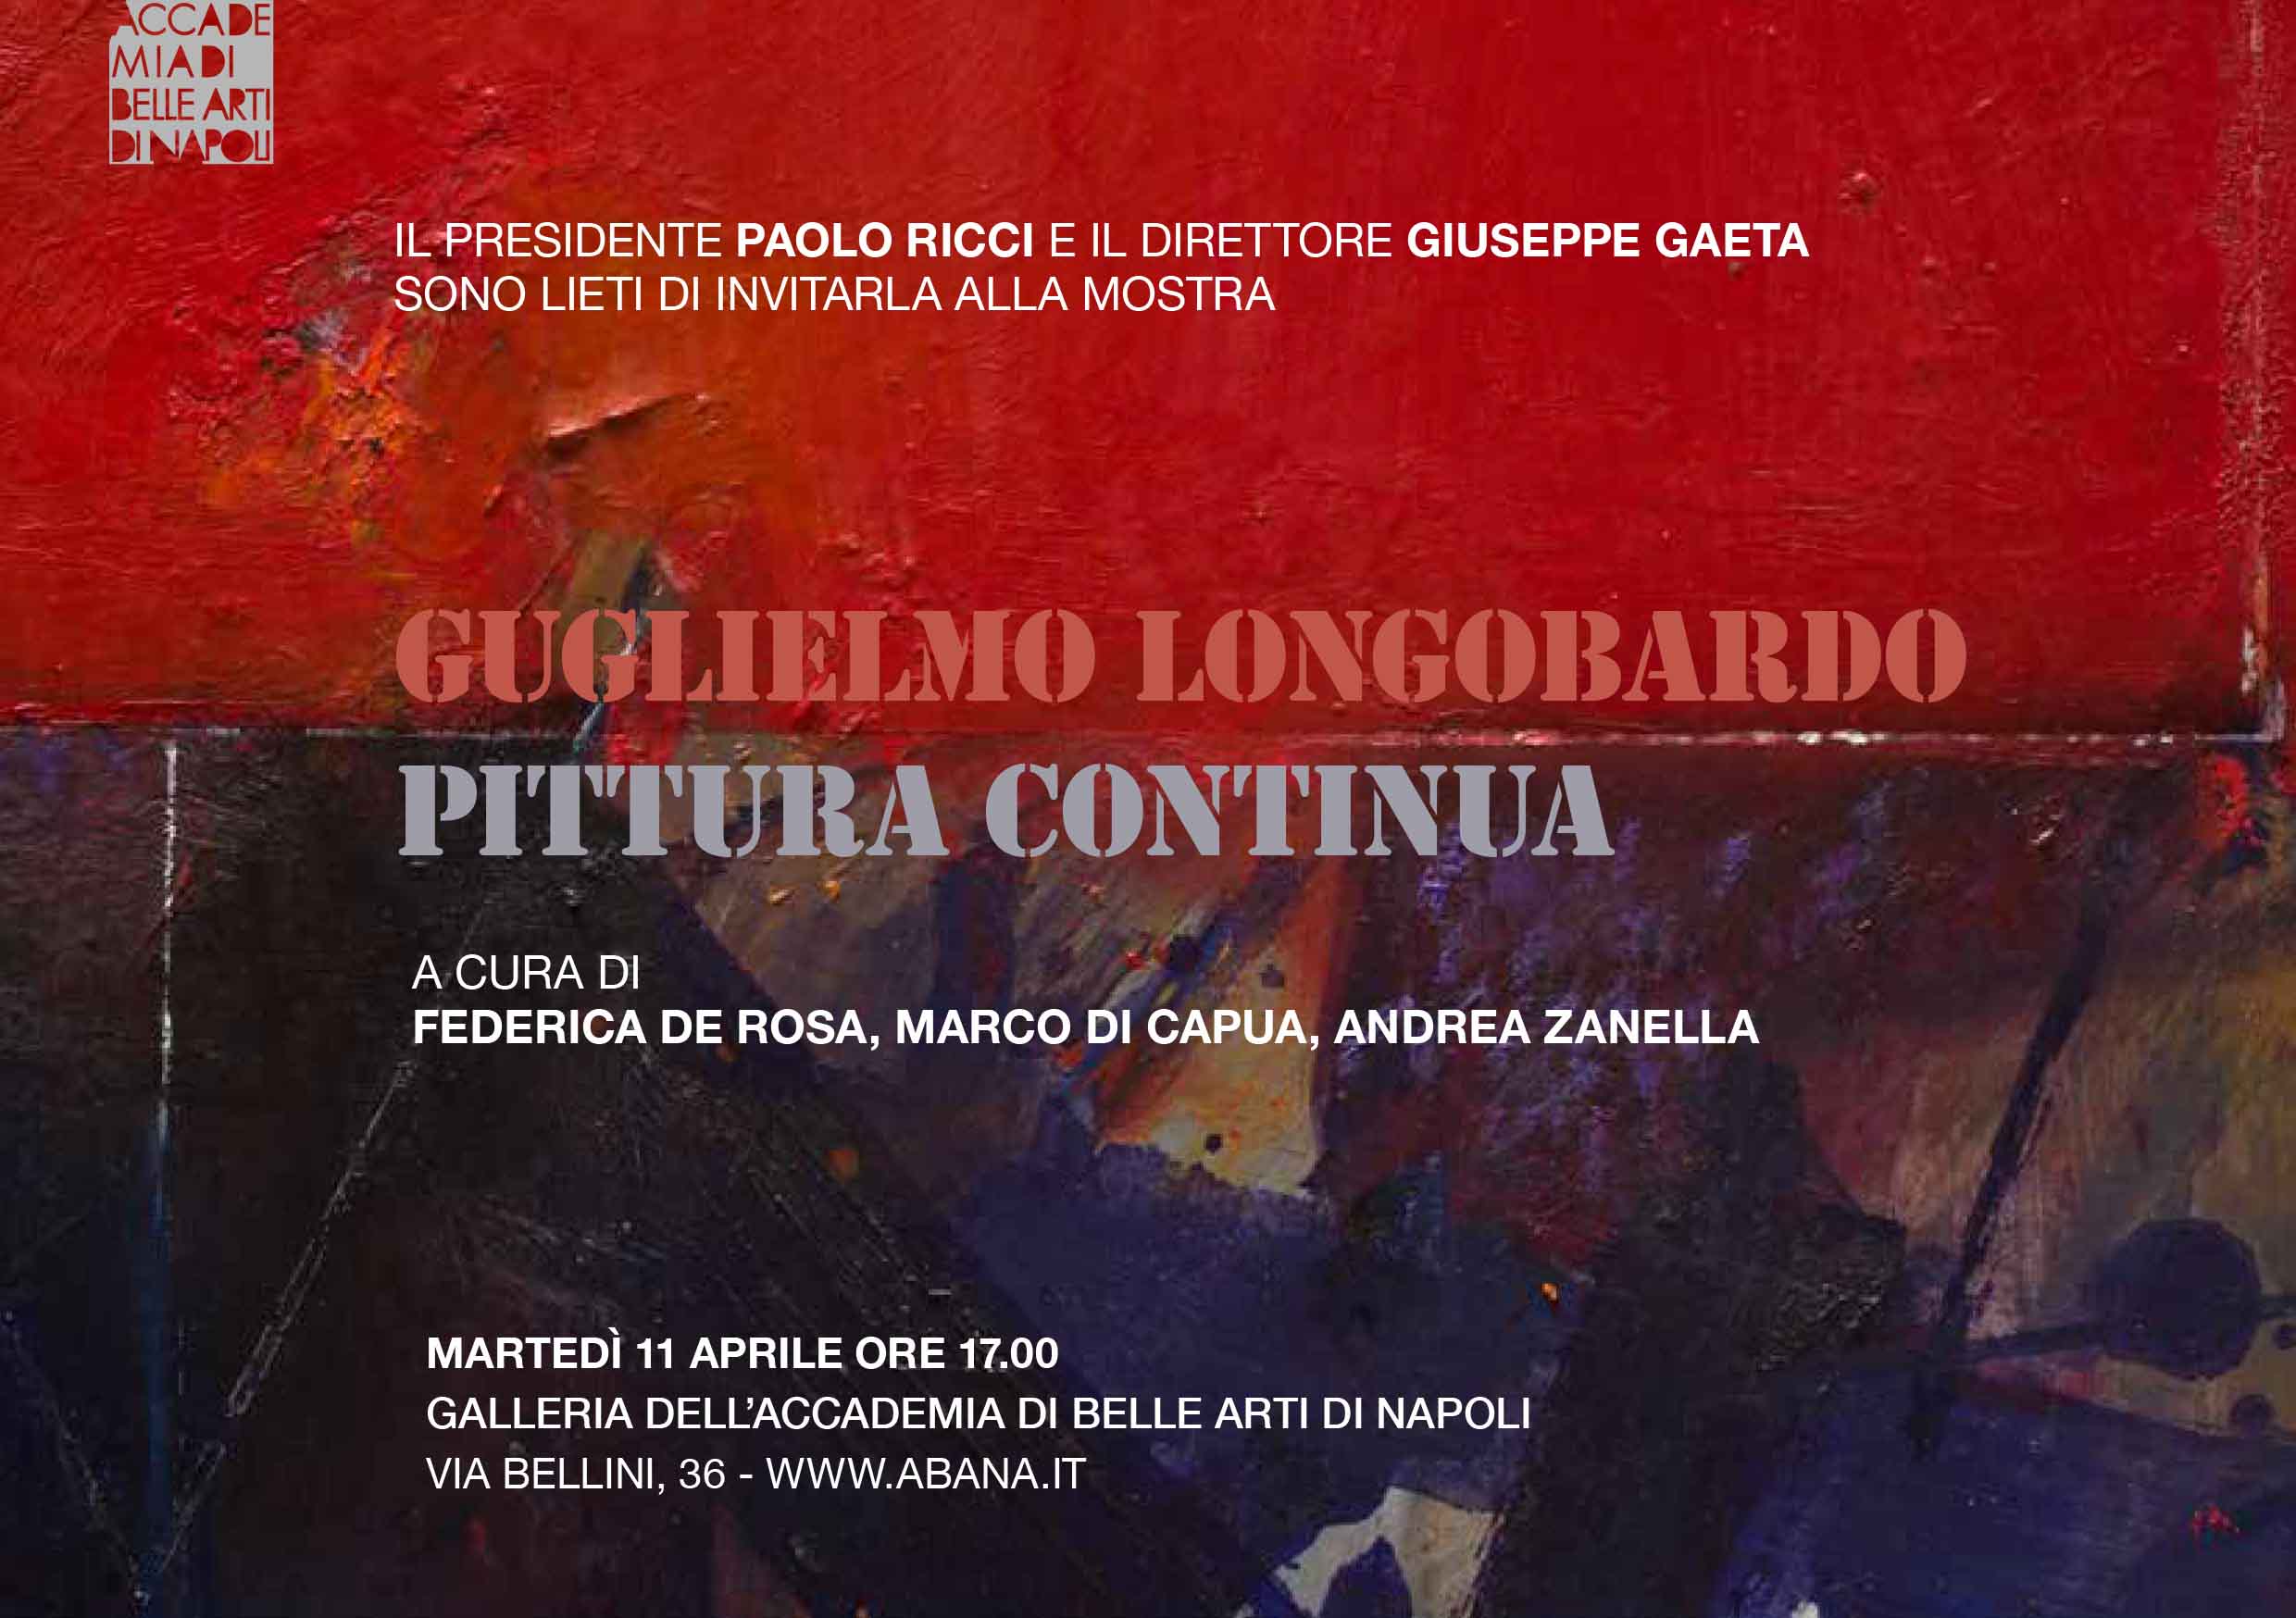 Guglielmo Longobardo - Pittura continua